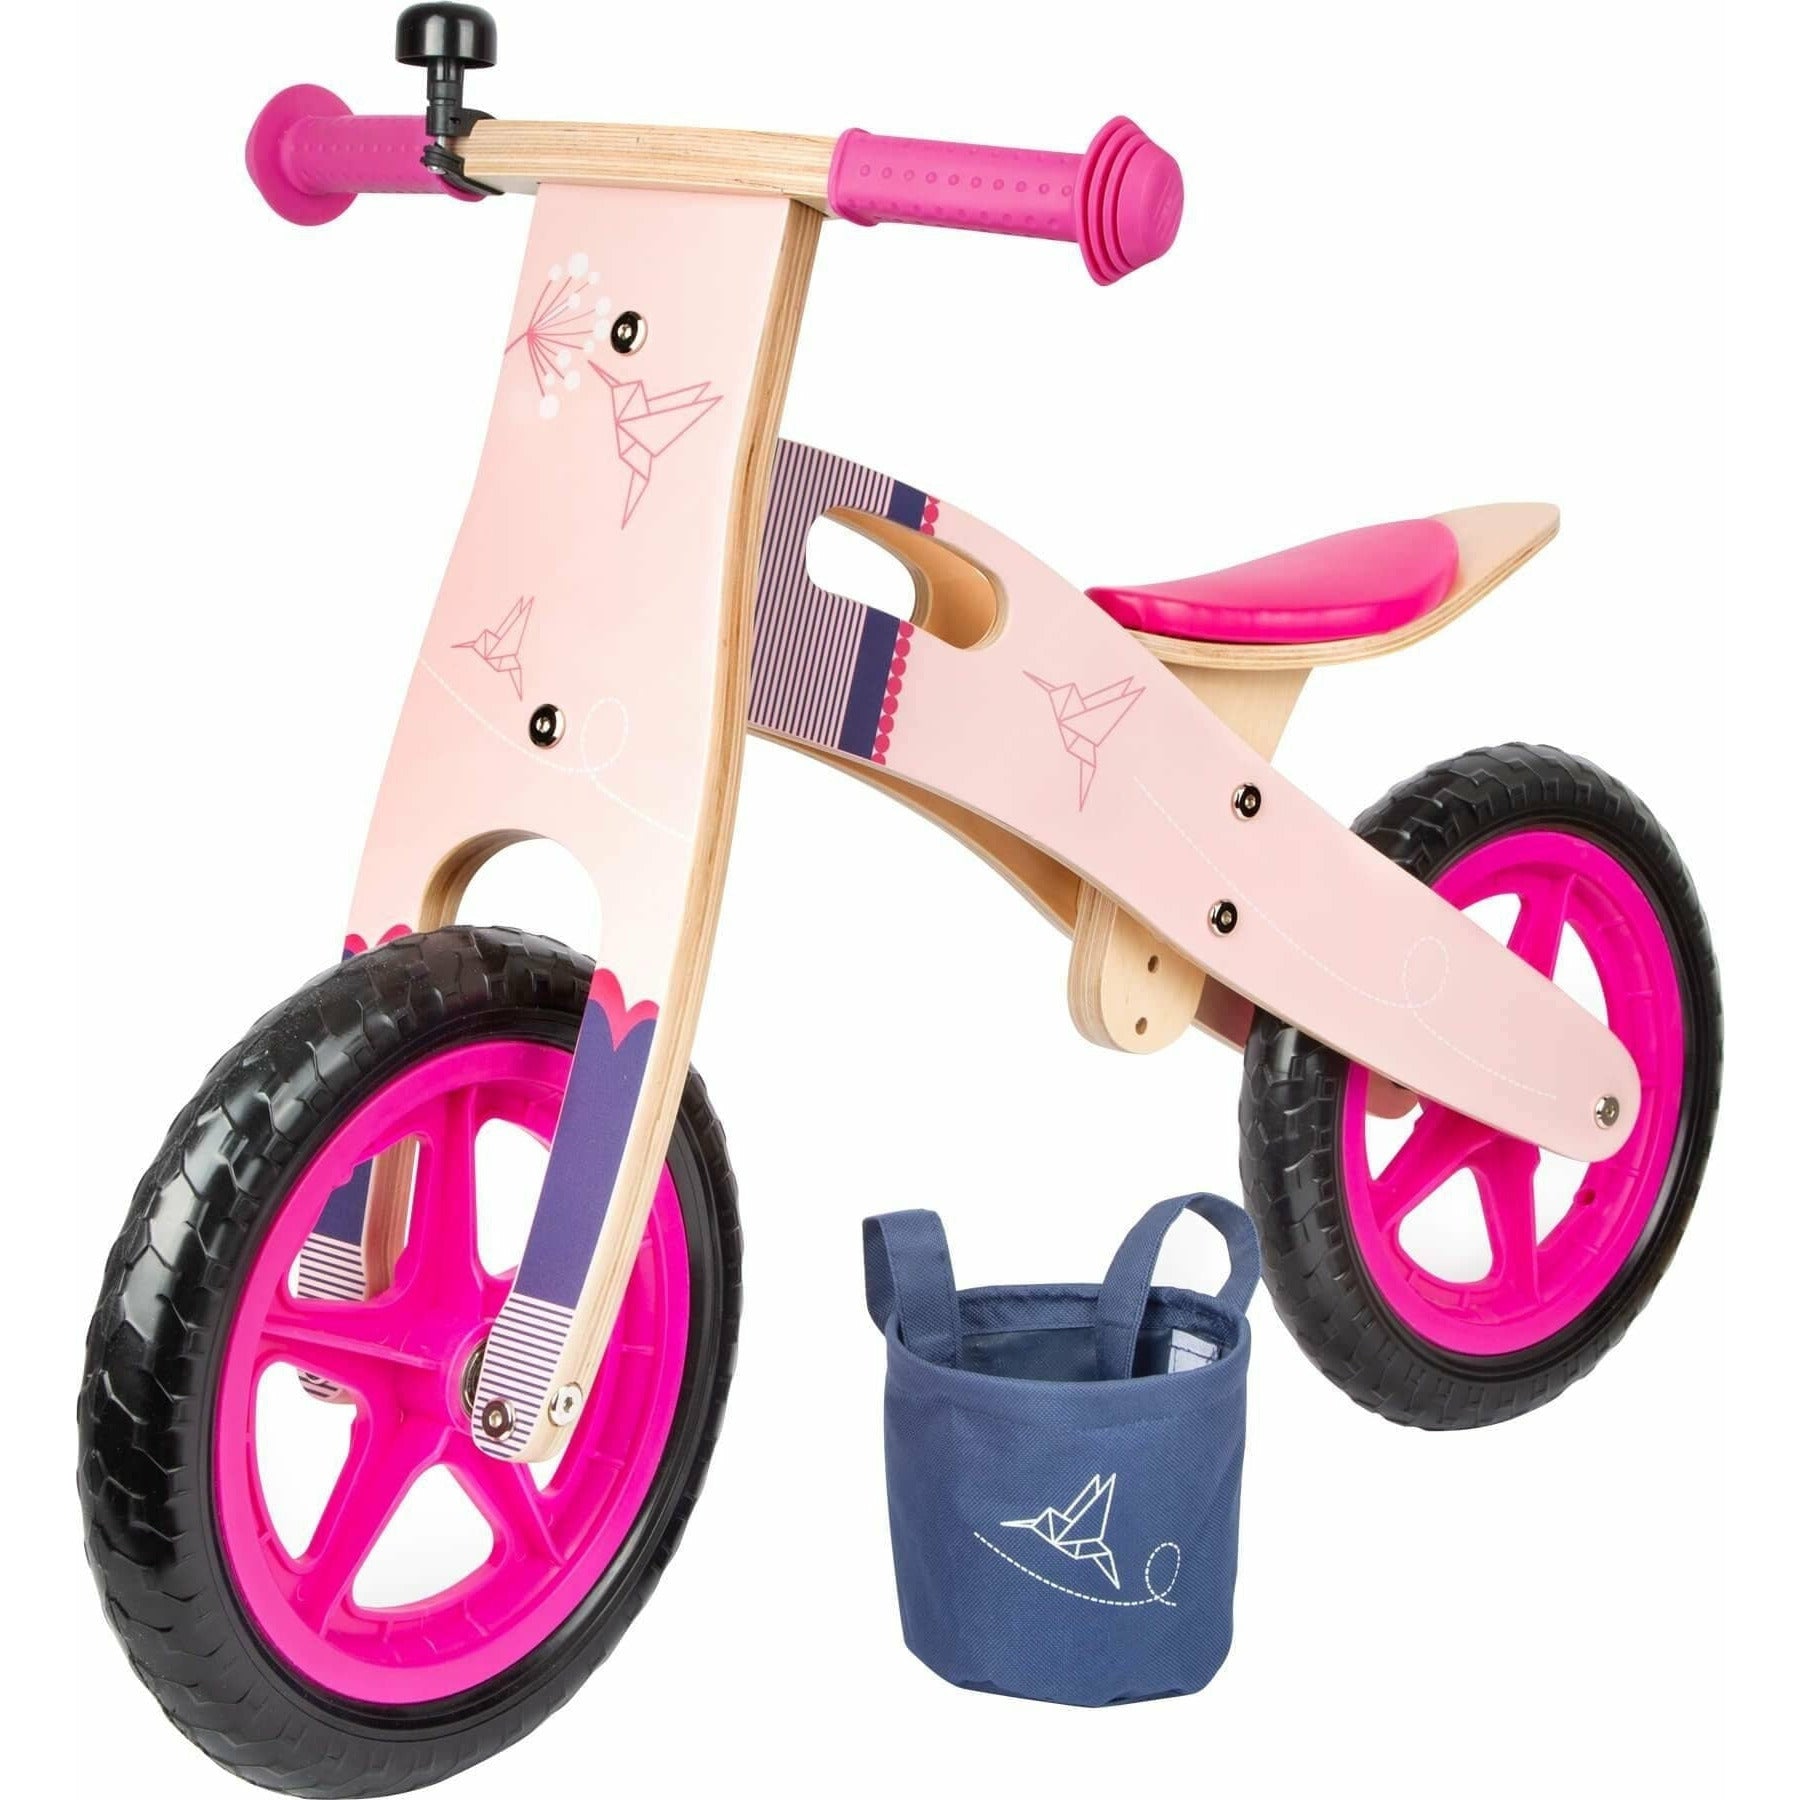 Personalisiertes Laufrad Rosa,(Name incl.) Kinder Rad, Holz Laufrad, Roller für Kinder Kinderspielzeug Tragegurt